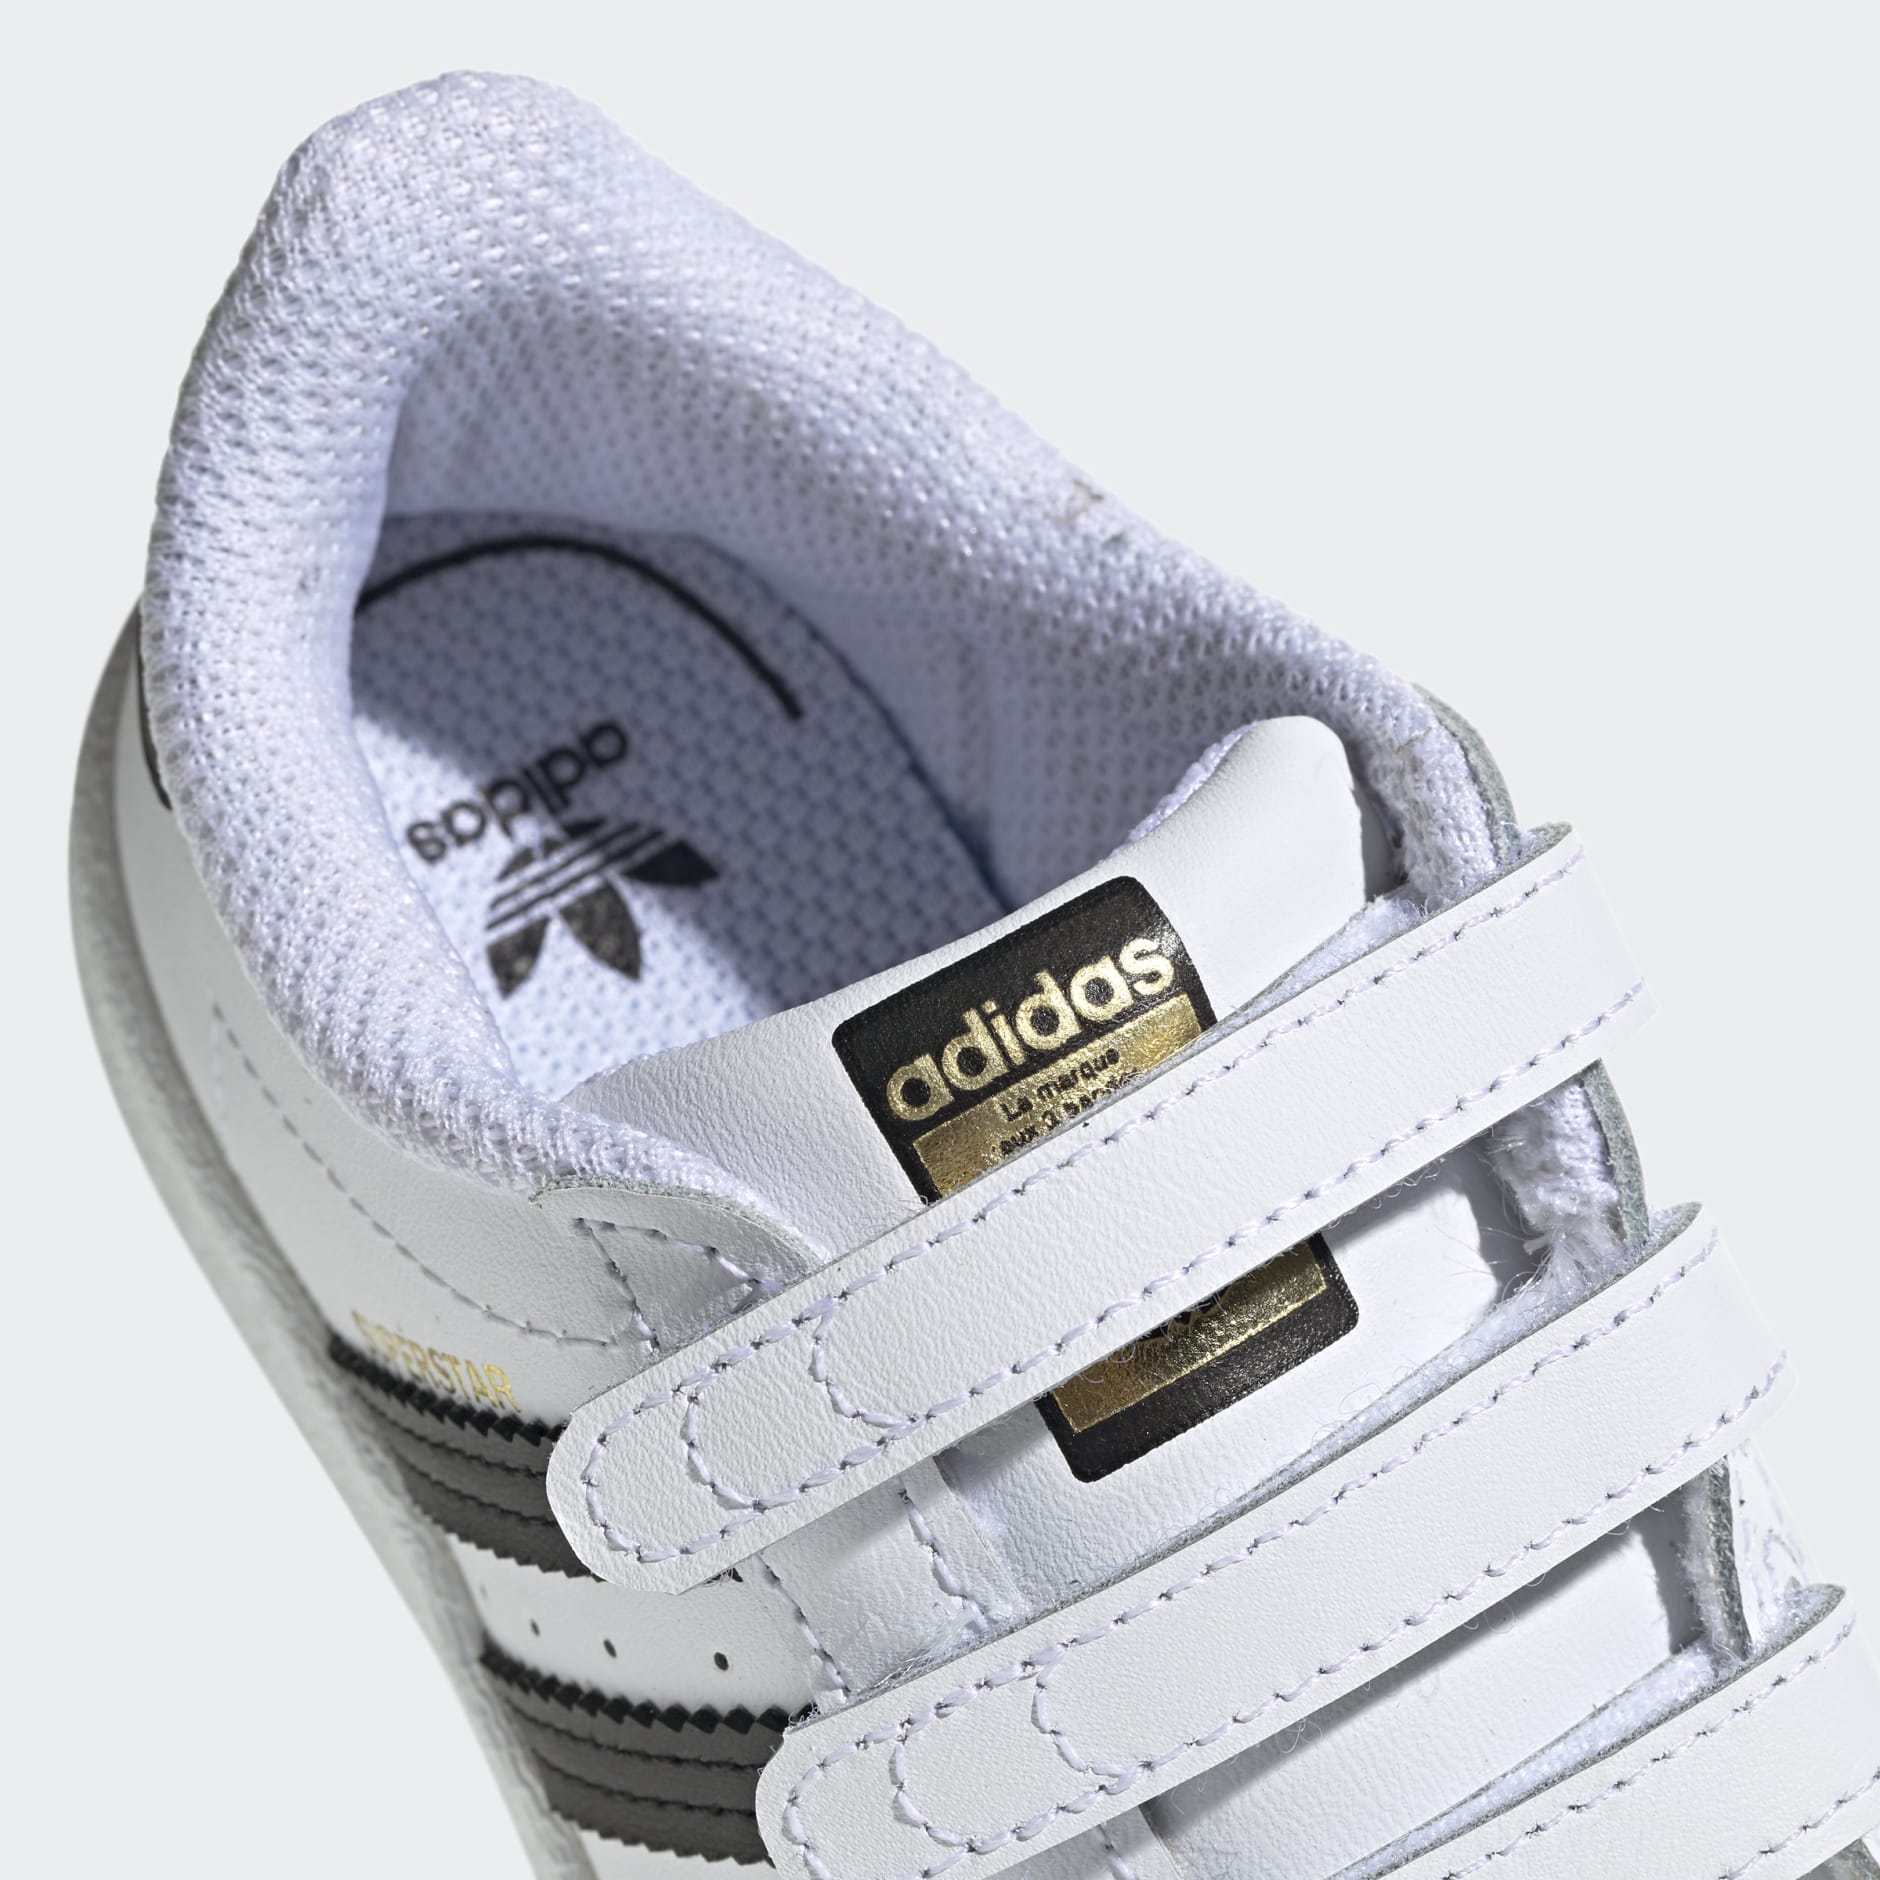 Adidas Superstar Ii Chaussures de fitness pour homme - Blanc/Blanc